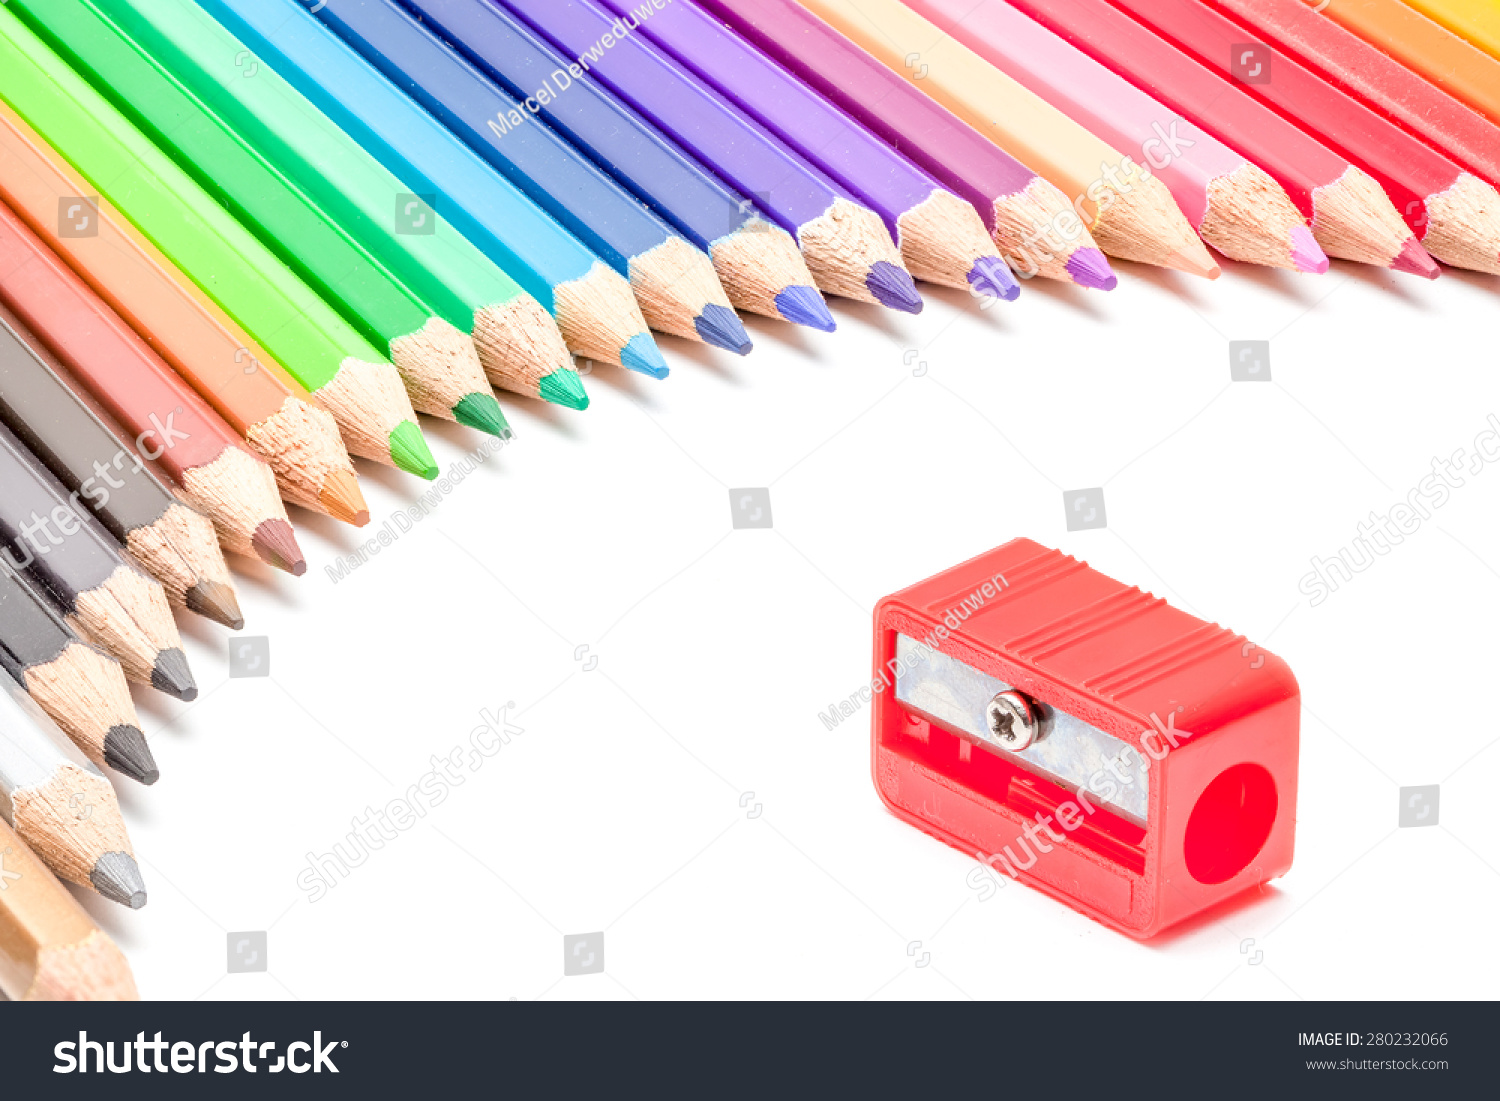 sharper pencil